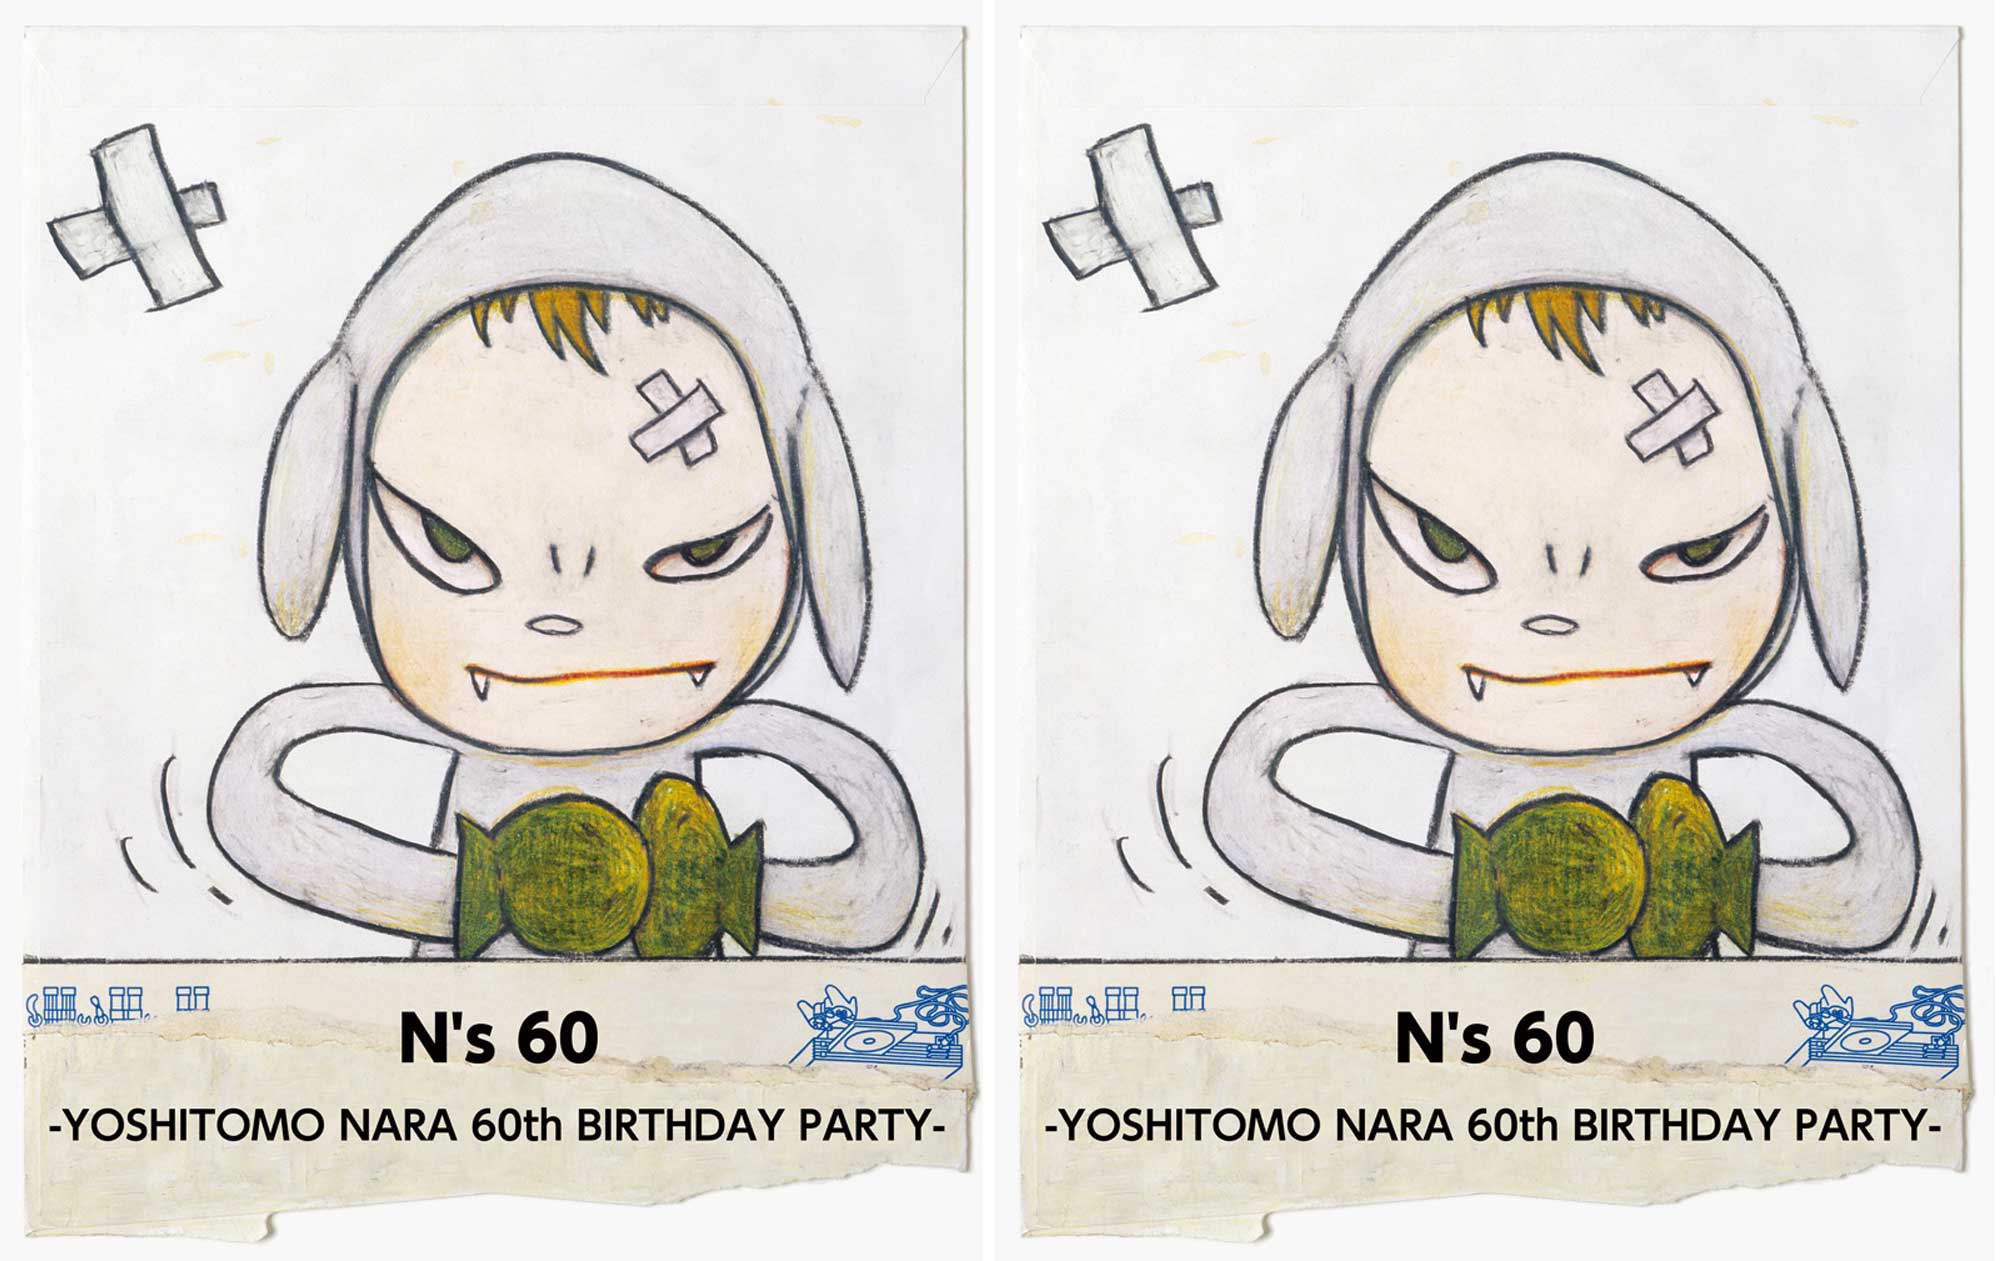 N's 60 YOSHITOMO NARA 60th BIRTHDAY PARTY